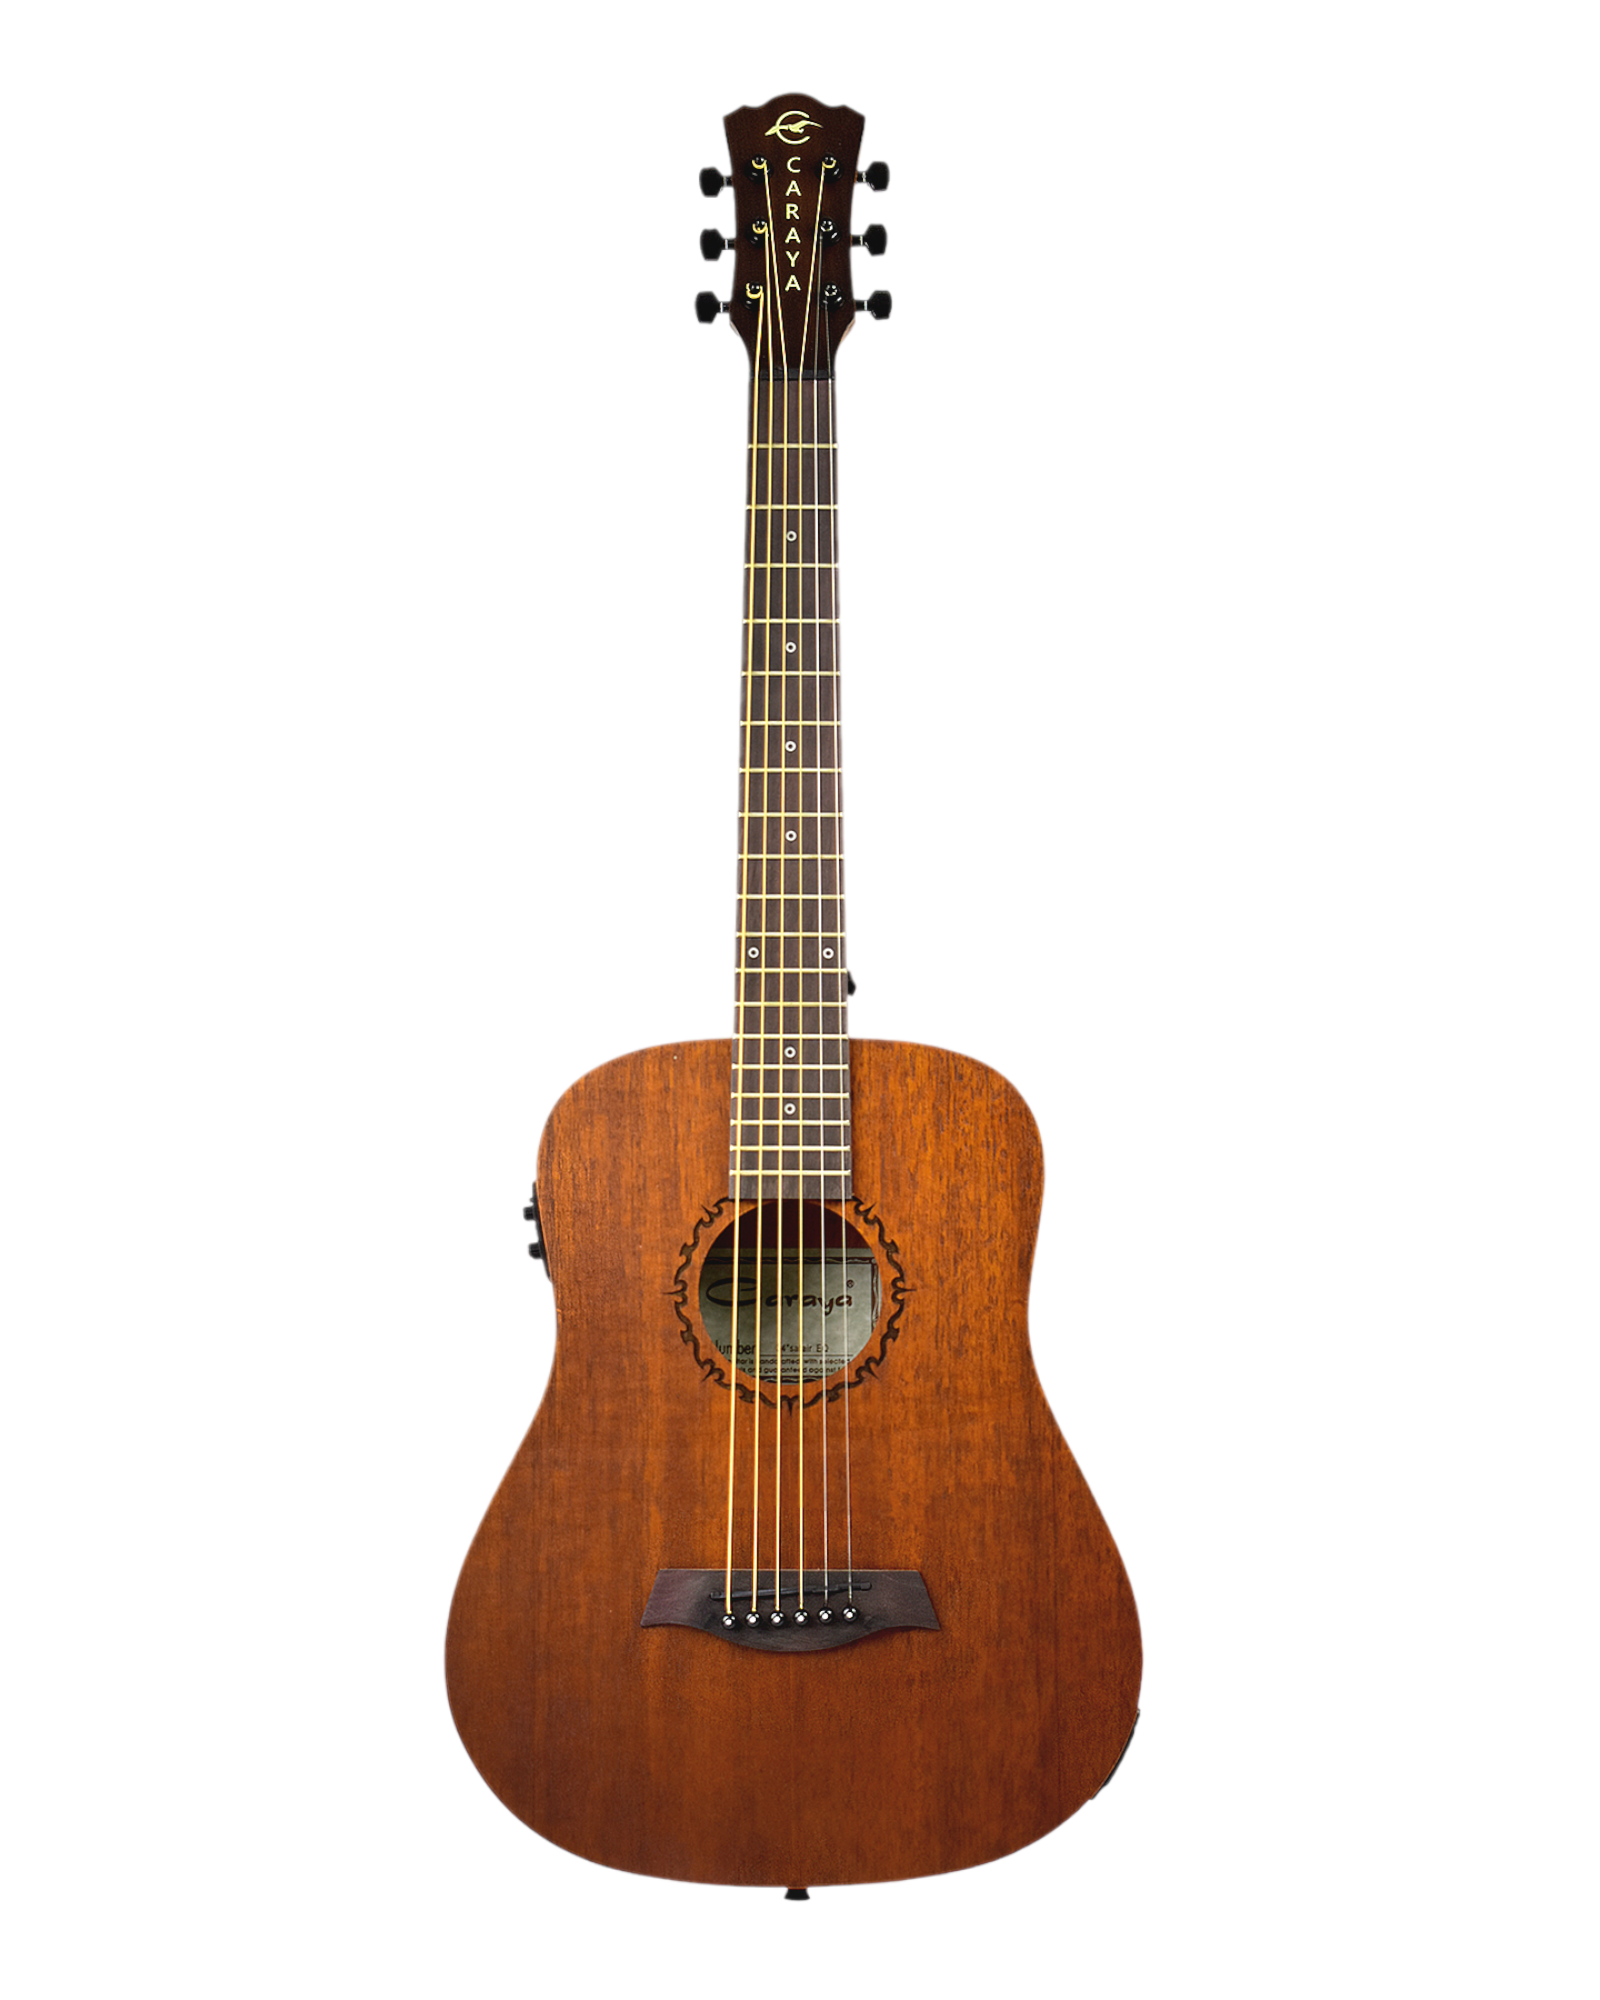 Acoustic guitar, with cutout, natural color, Caraya